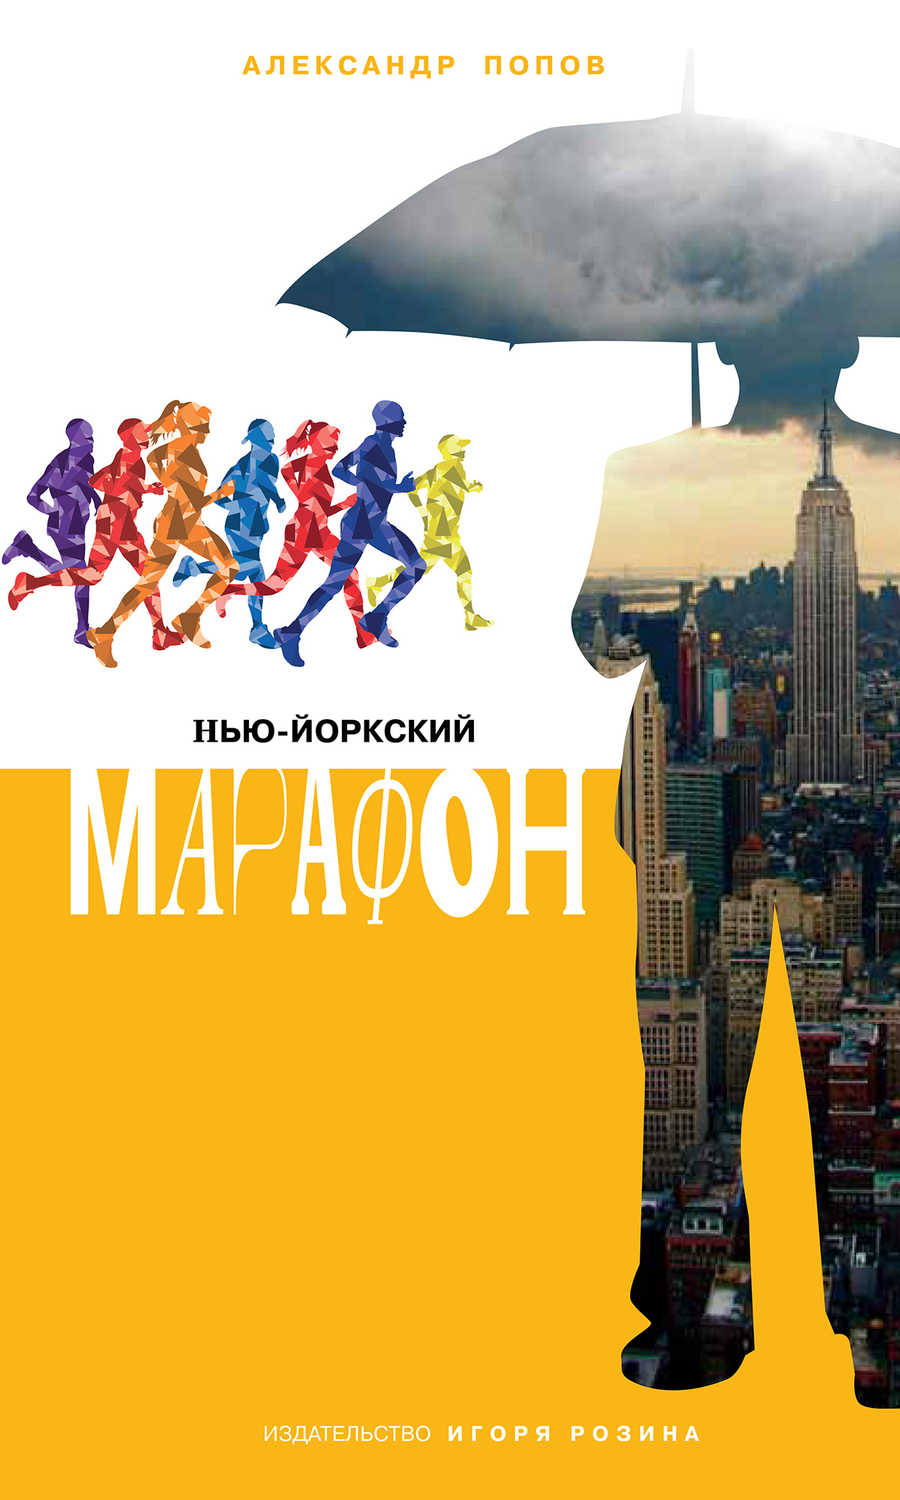 Попов Александр Евгеньевич - «Нью-Йоркский марафон. Записки не по уму»